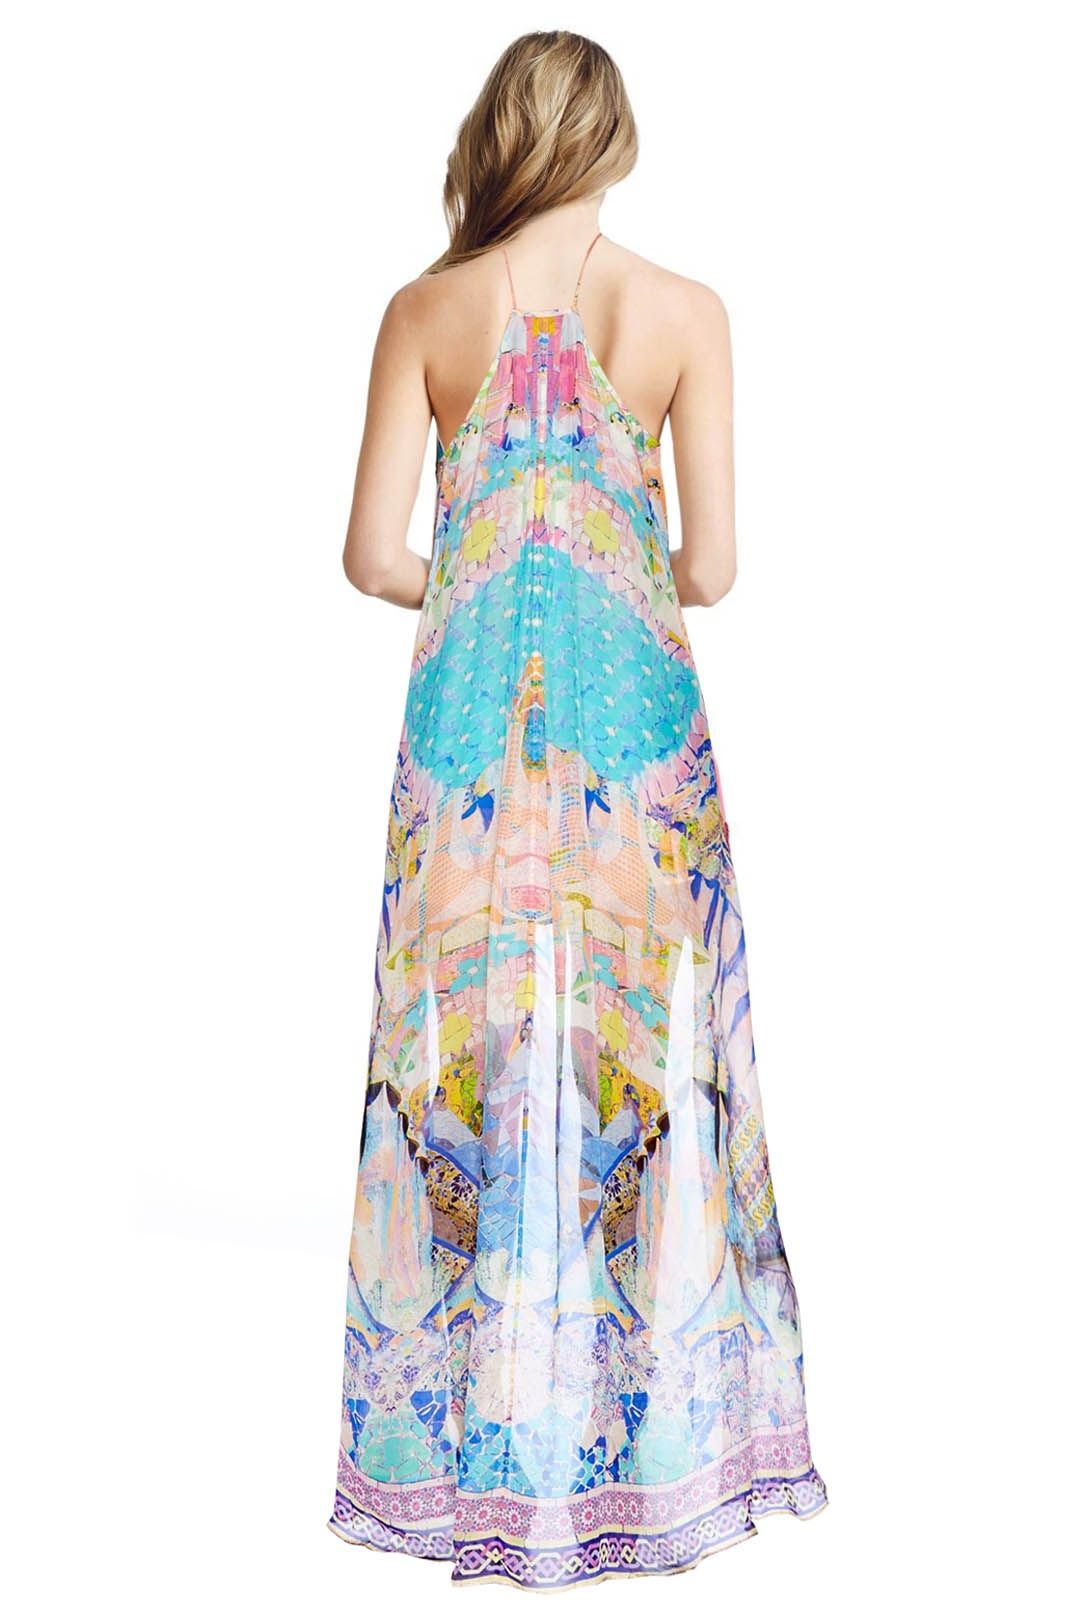 Camilla - Gaudi Tribute Short Sheer Overlay Dress - Prints - Back